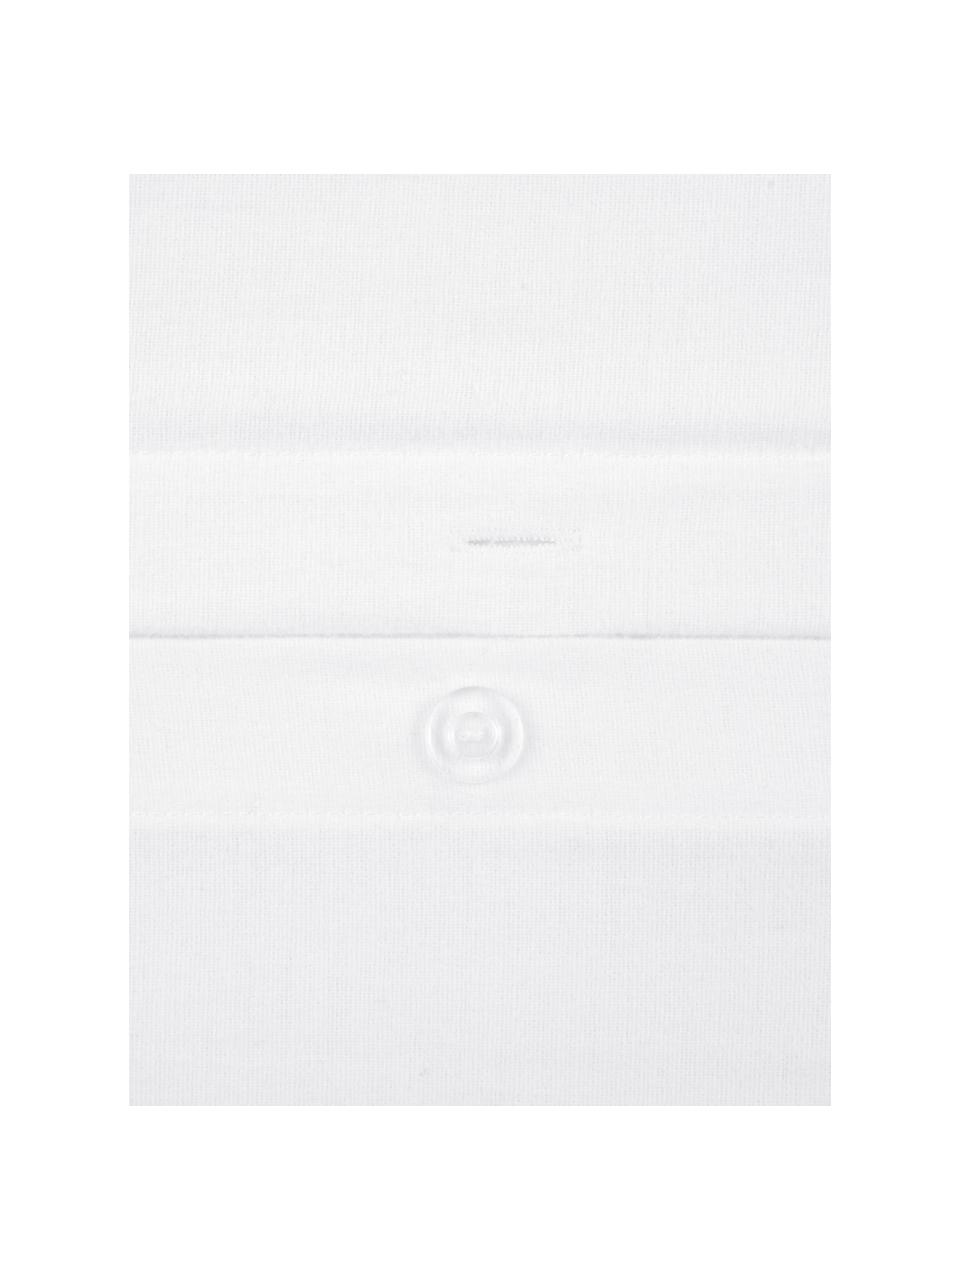 Flanell-Kissenbezüge Biba in Weiß, 2 Stück, Webart: Flanell Flanell ist ein k, Weiß, B 40 x L 80 cm